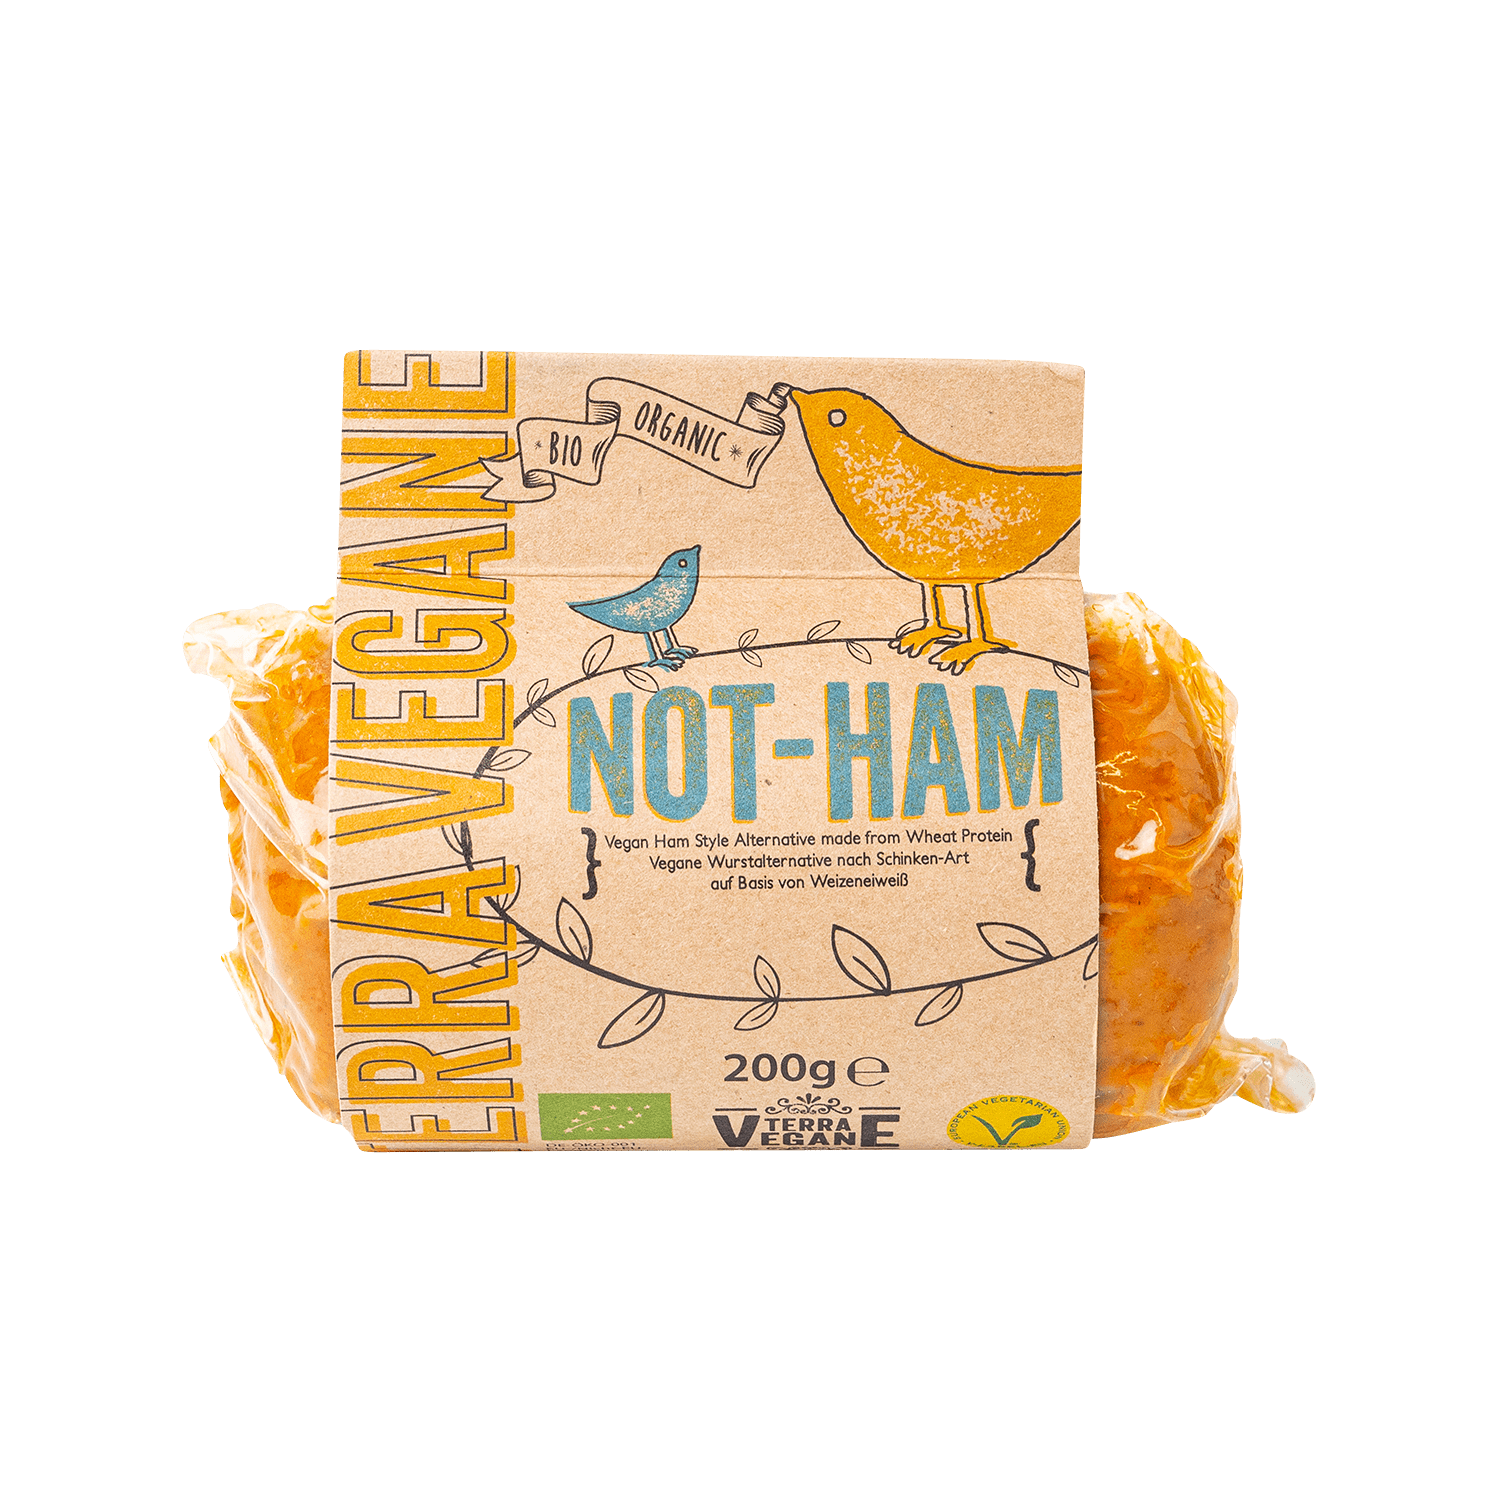 Not-Ham, Organic, 200g